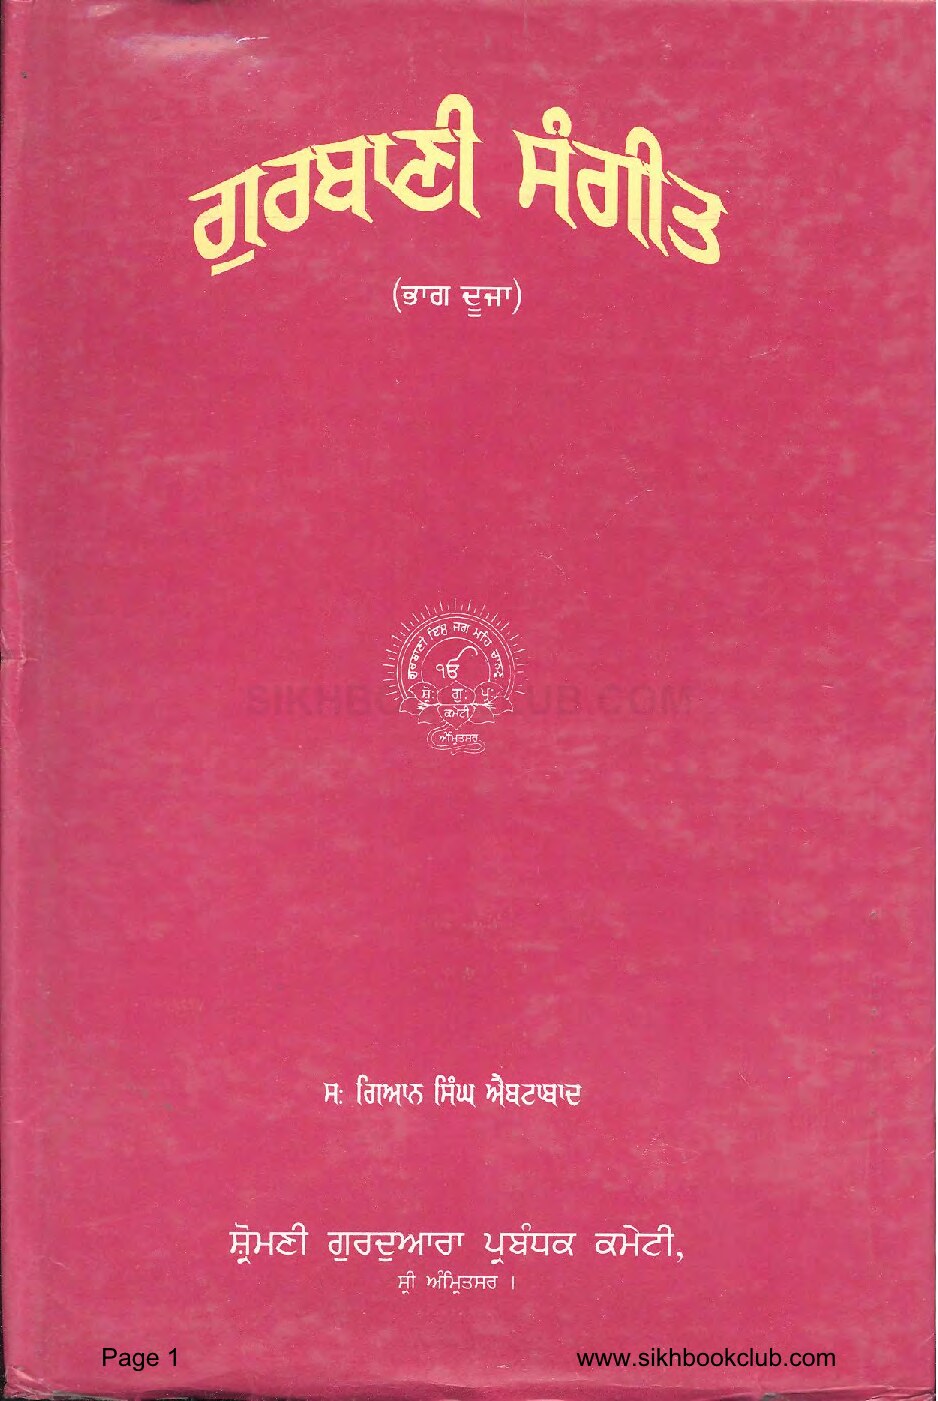 Gurbani Sangeet (Part 2) - ਗੁਰਬਾਣੀ ਸੰਗੀਤ (ਭਾਗ -2)